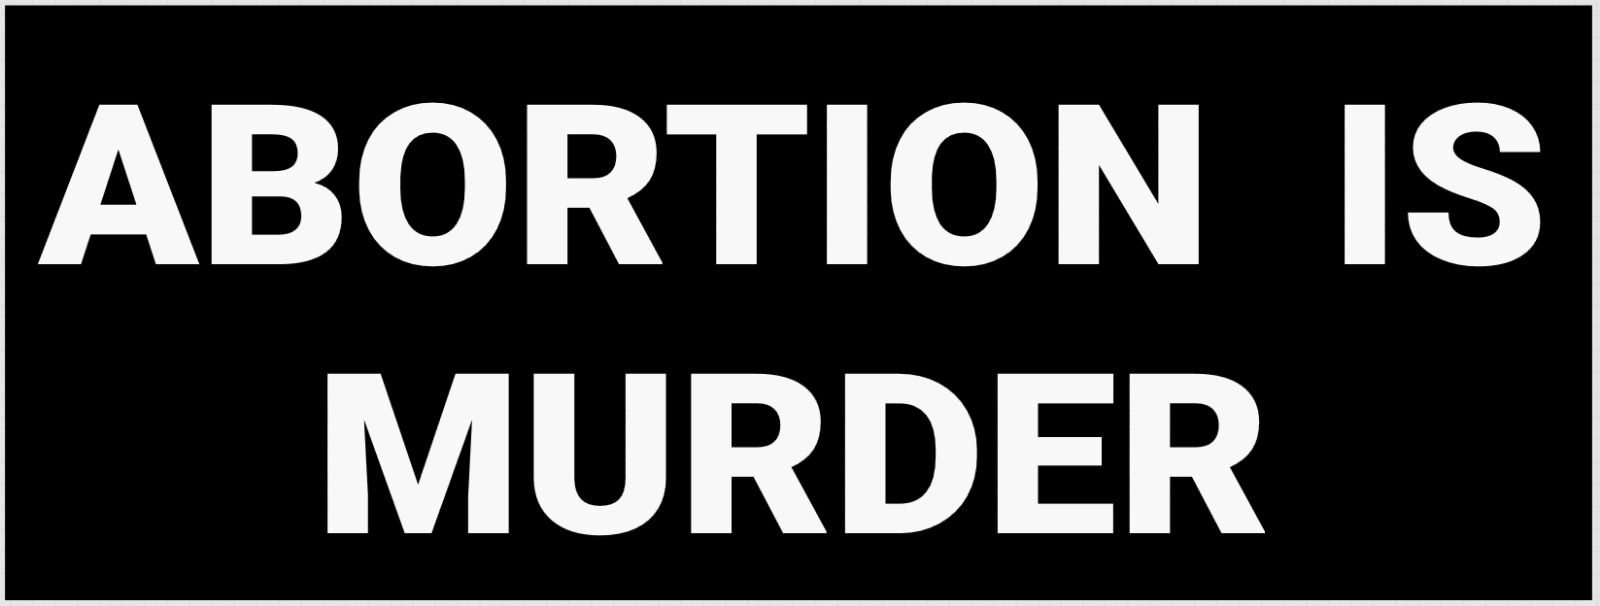 ABORTION IS MURDER BUMPER STICKER DECAL REPUBLICAN PRO-LIFE